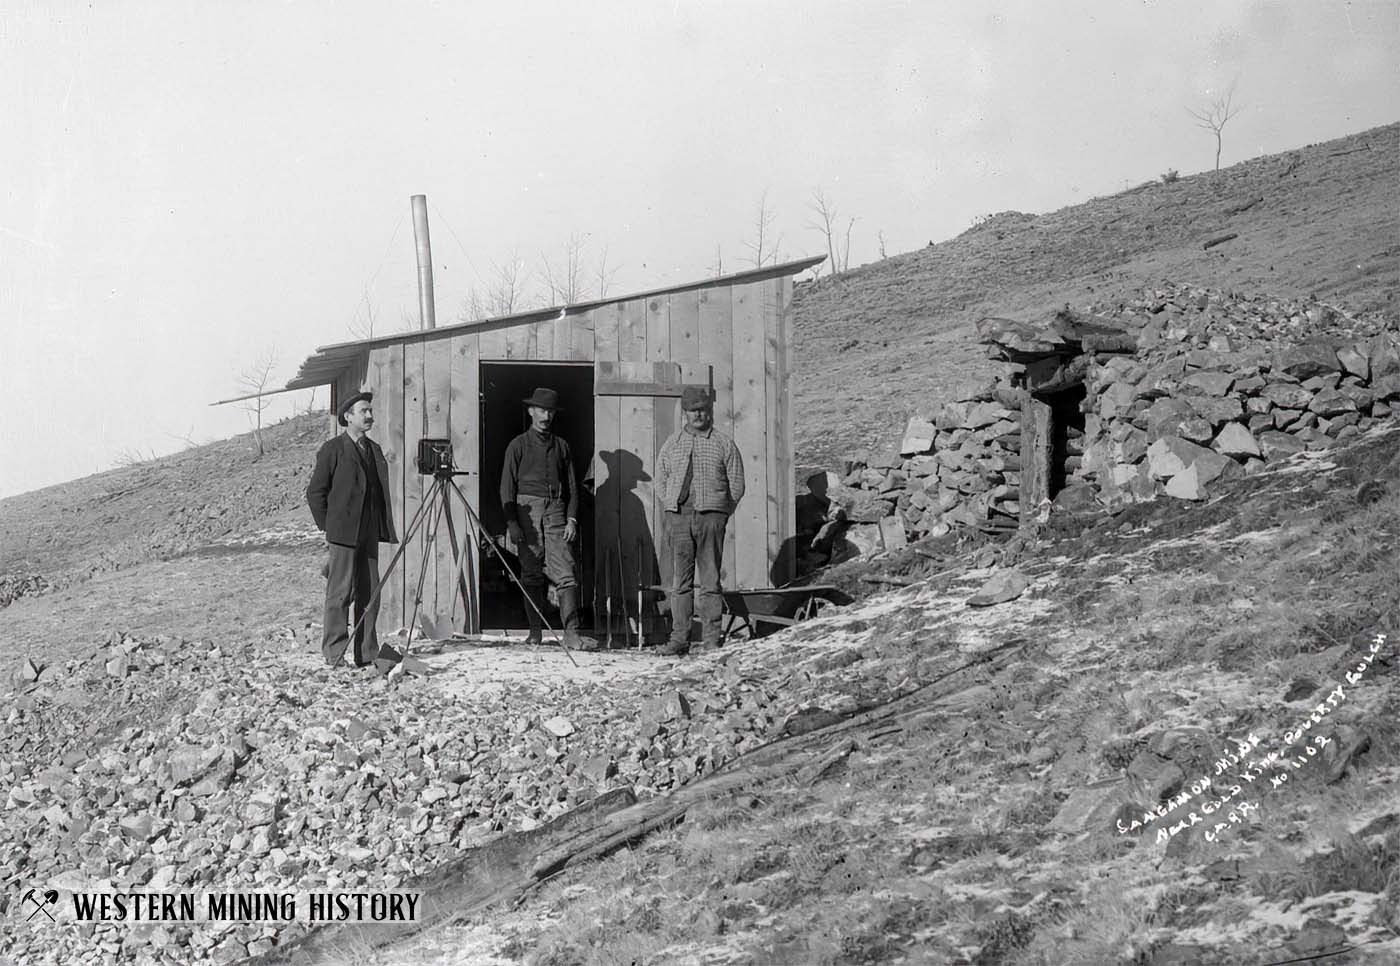 Sangamon mine at Poverty Gulch - Cripple Creek District ca. 1890s